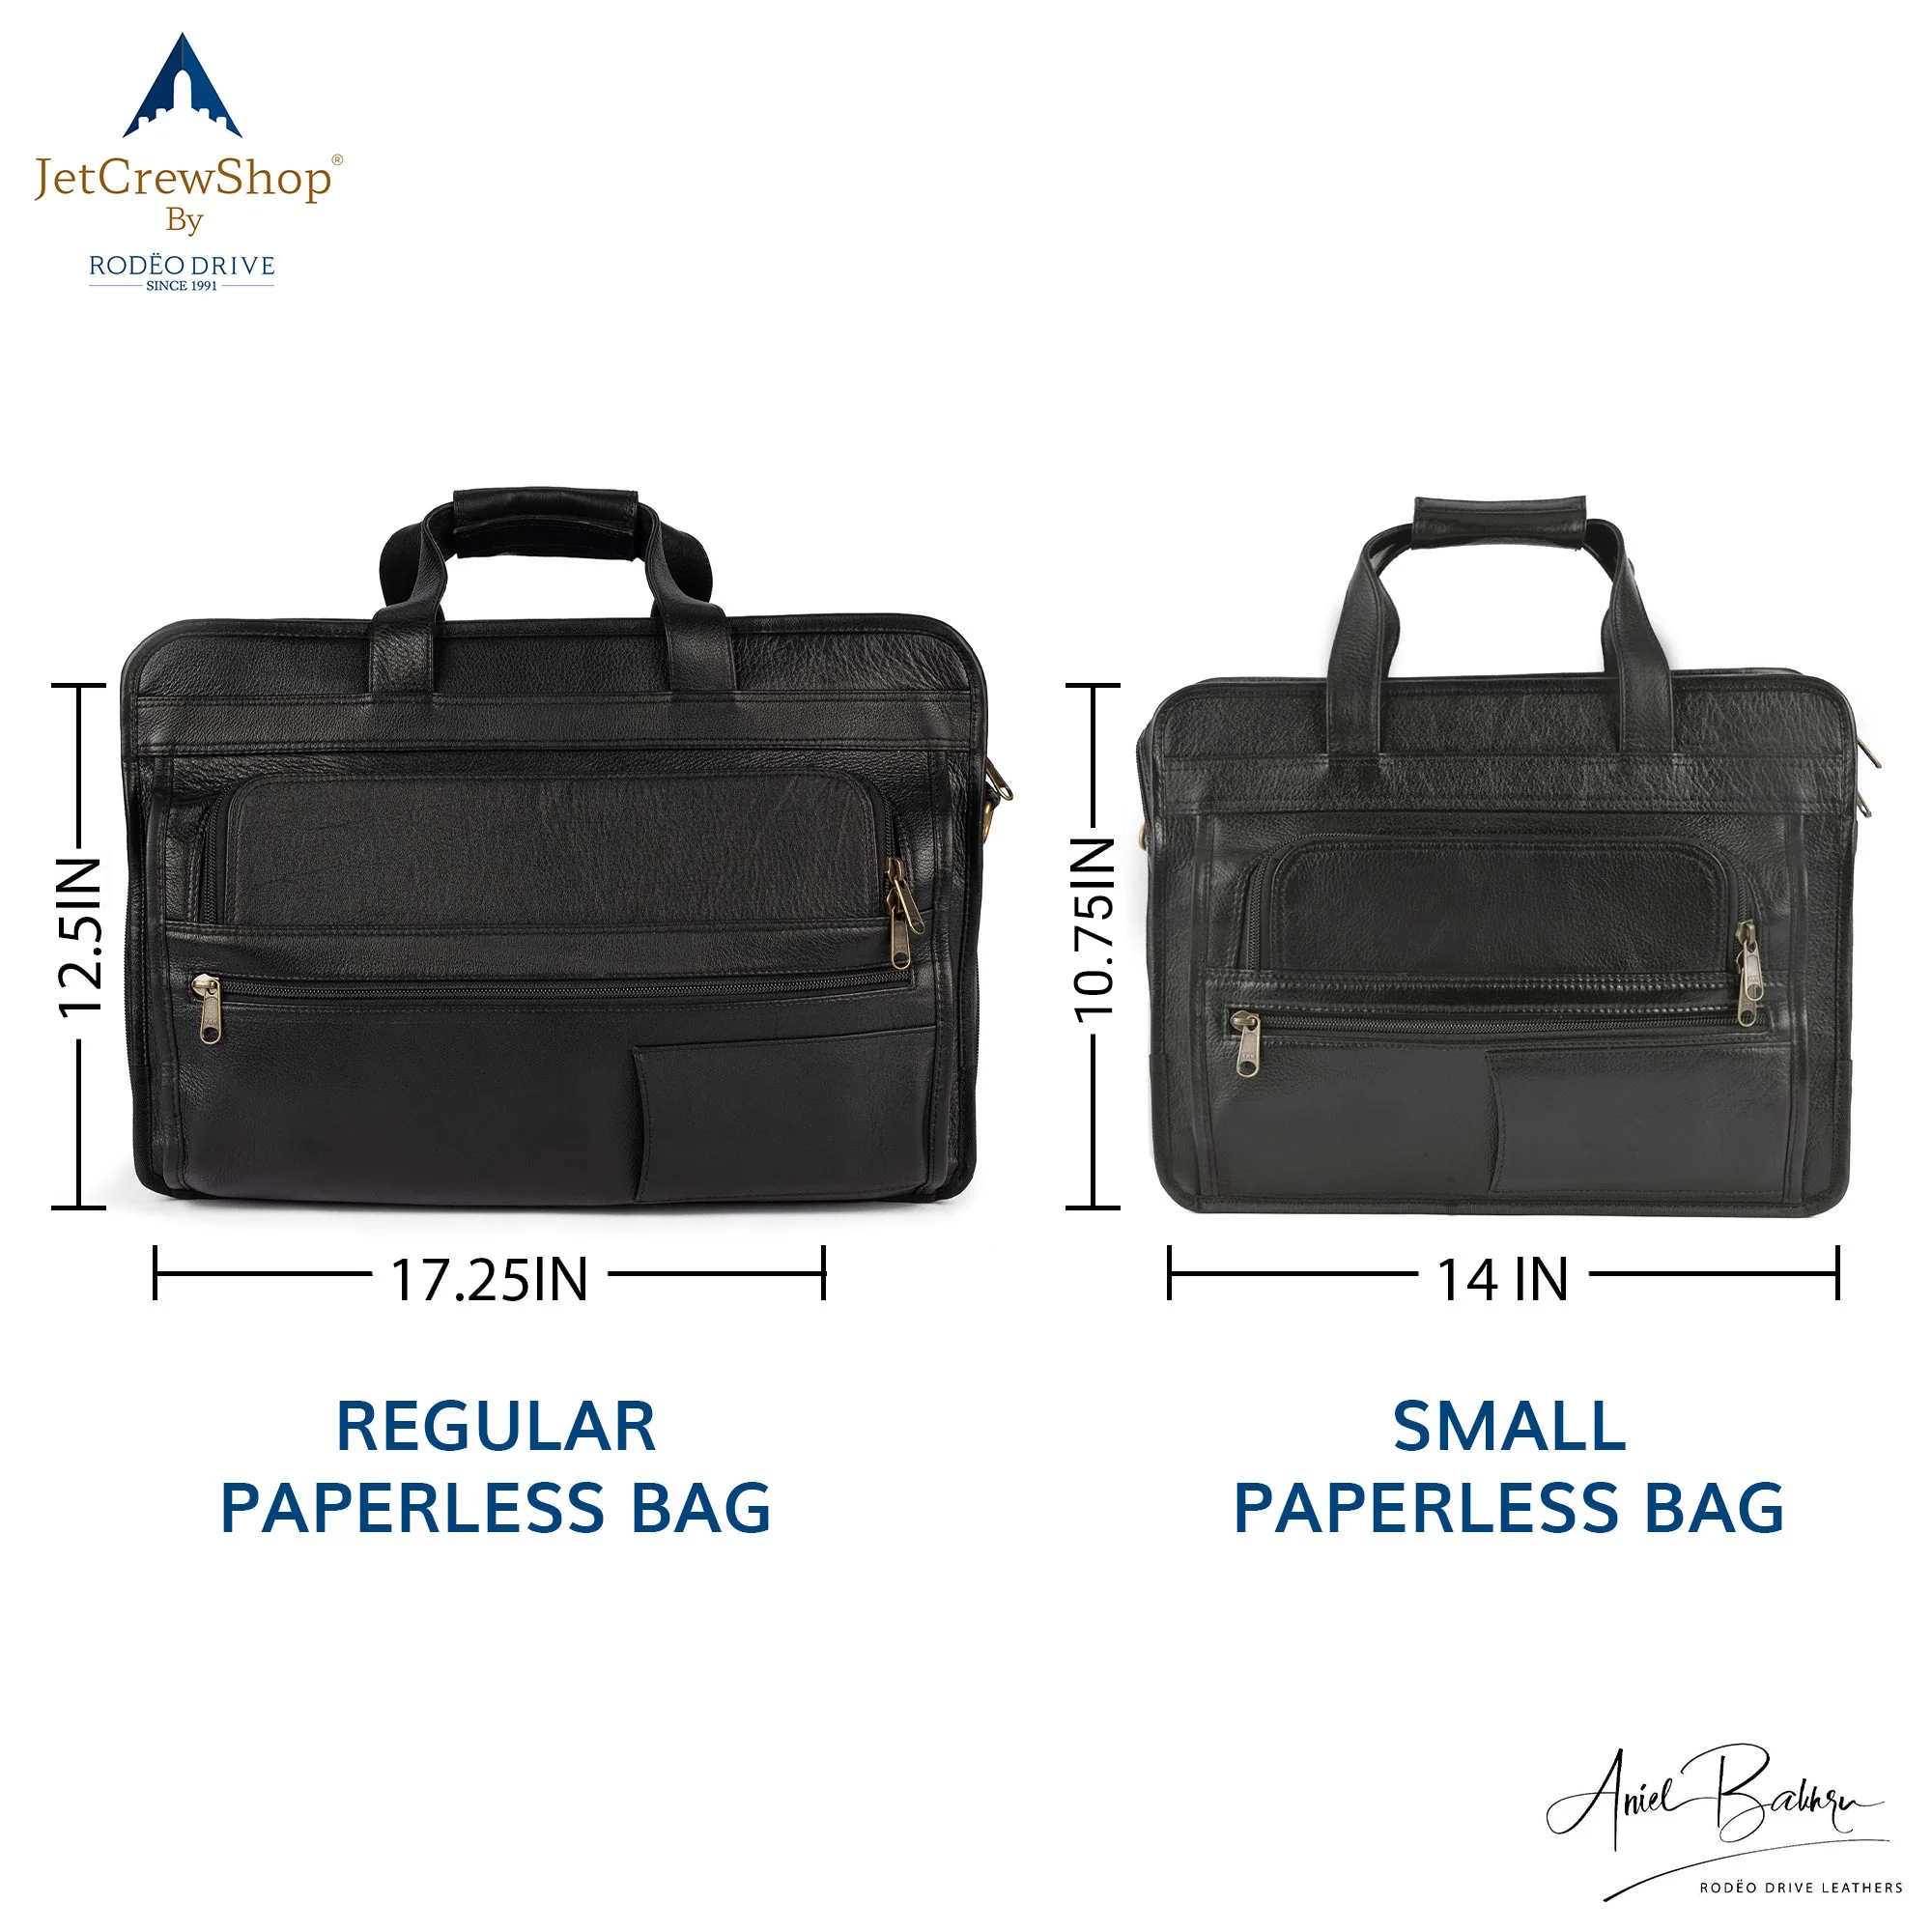 Image depicting black regular paperless bag and small paperless bag